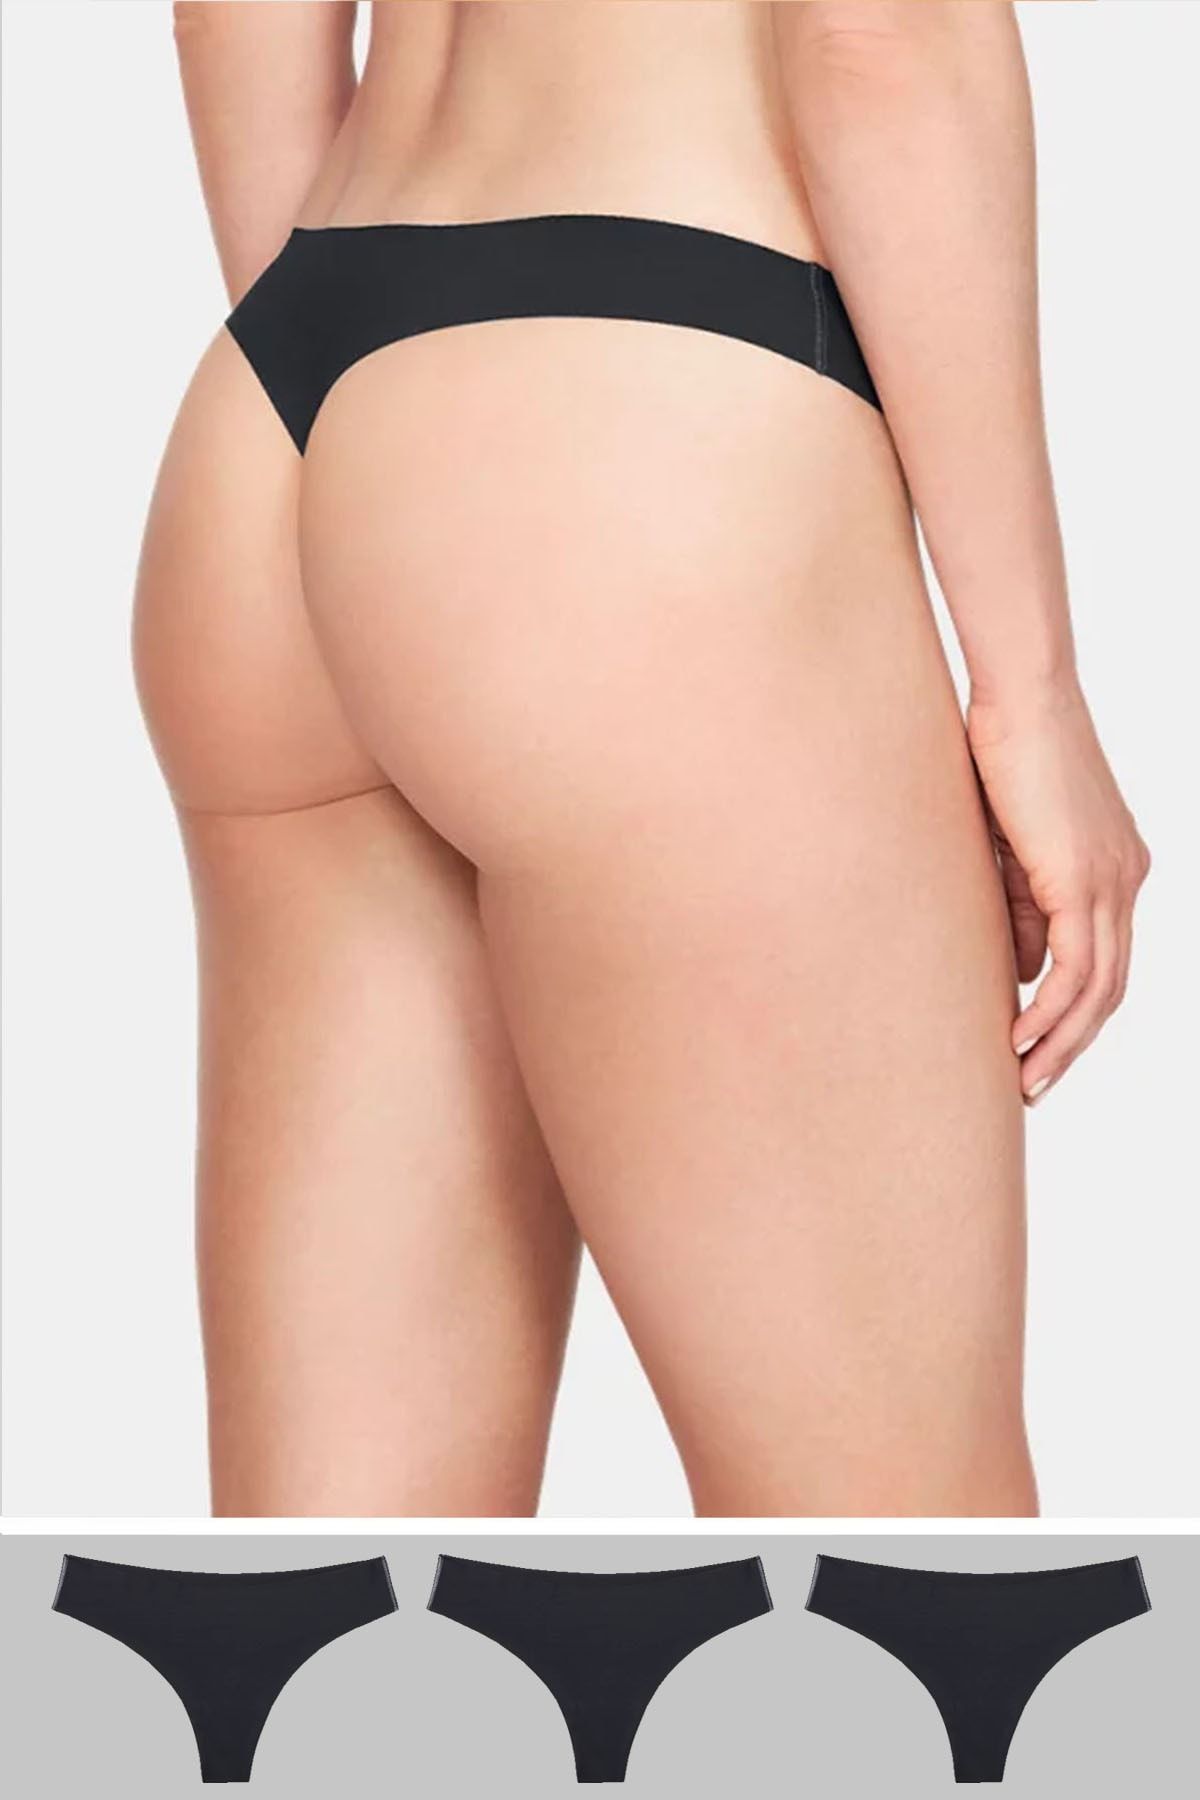 UMFANG Women's Black Laser Cut Thong Panties 3 Pack - Trendyol